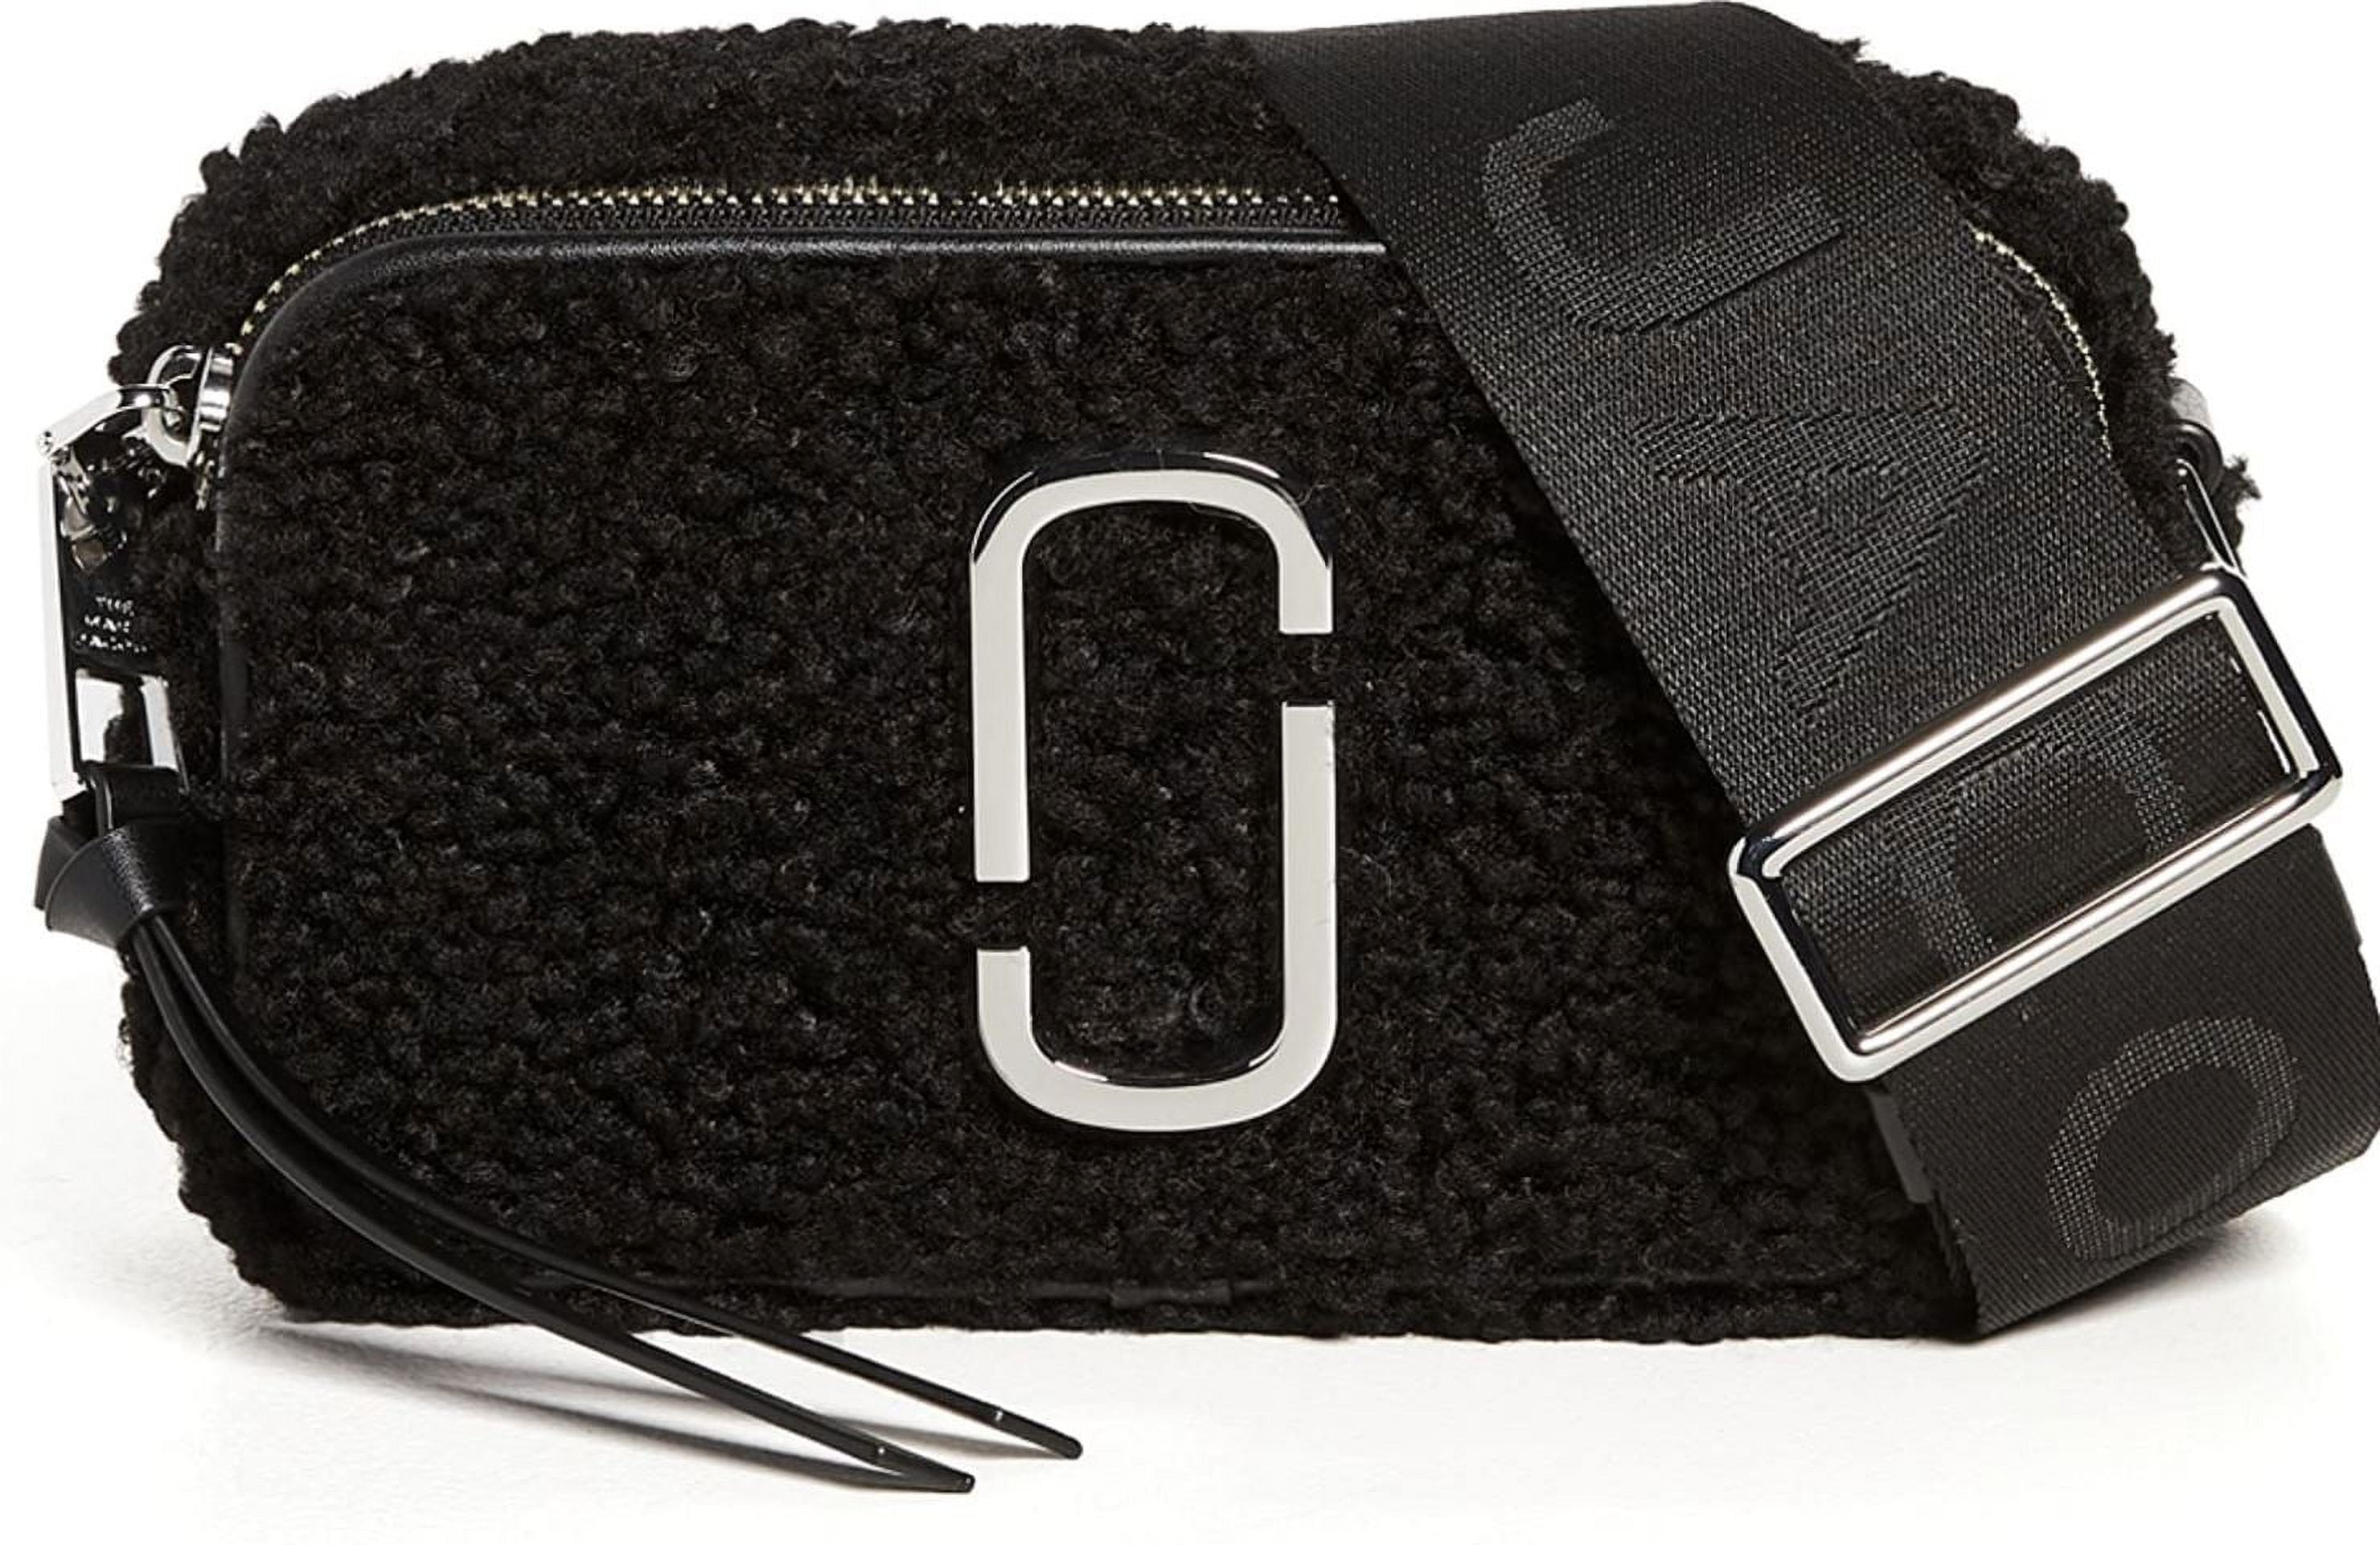  Marc Jacobs Women's Snapshot Camera Bag, Black/Honey